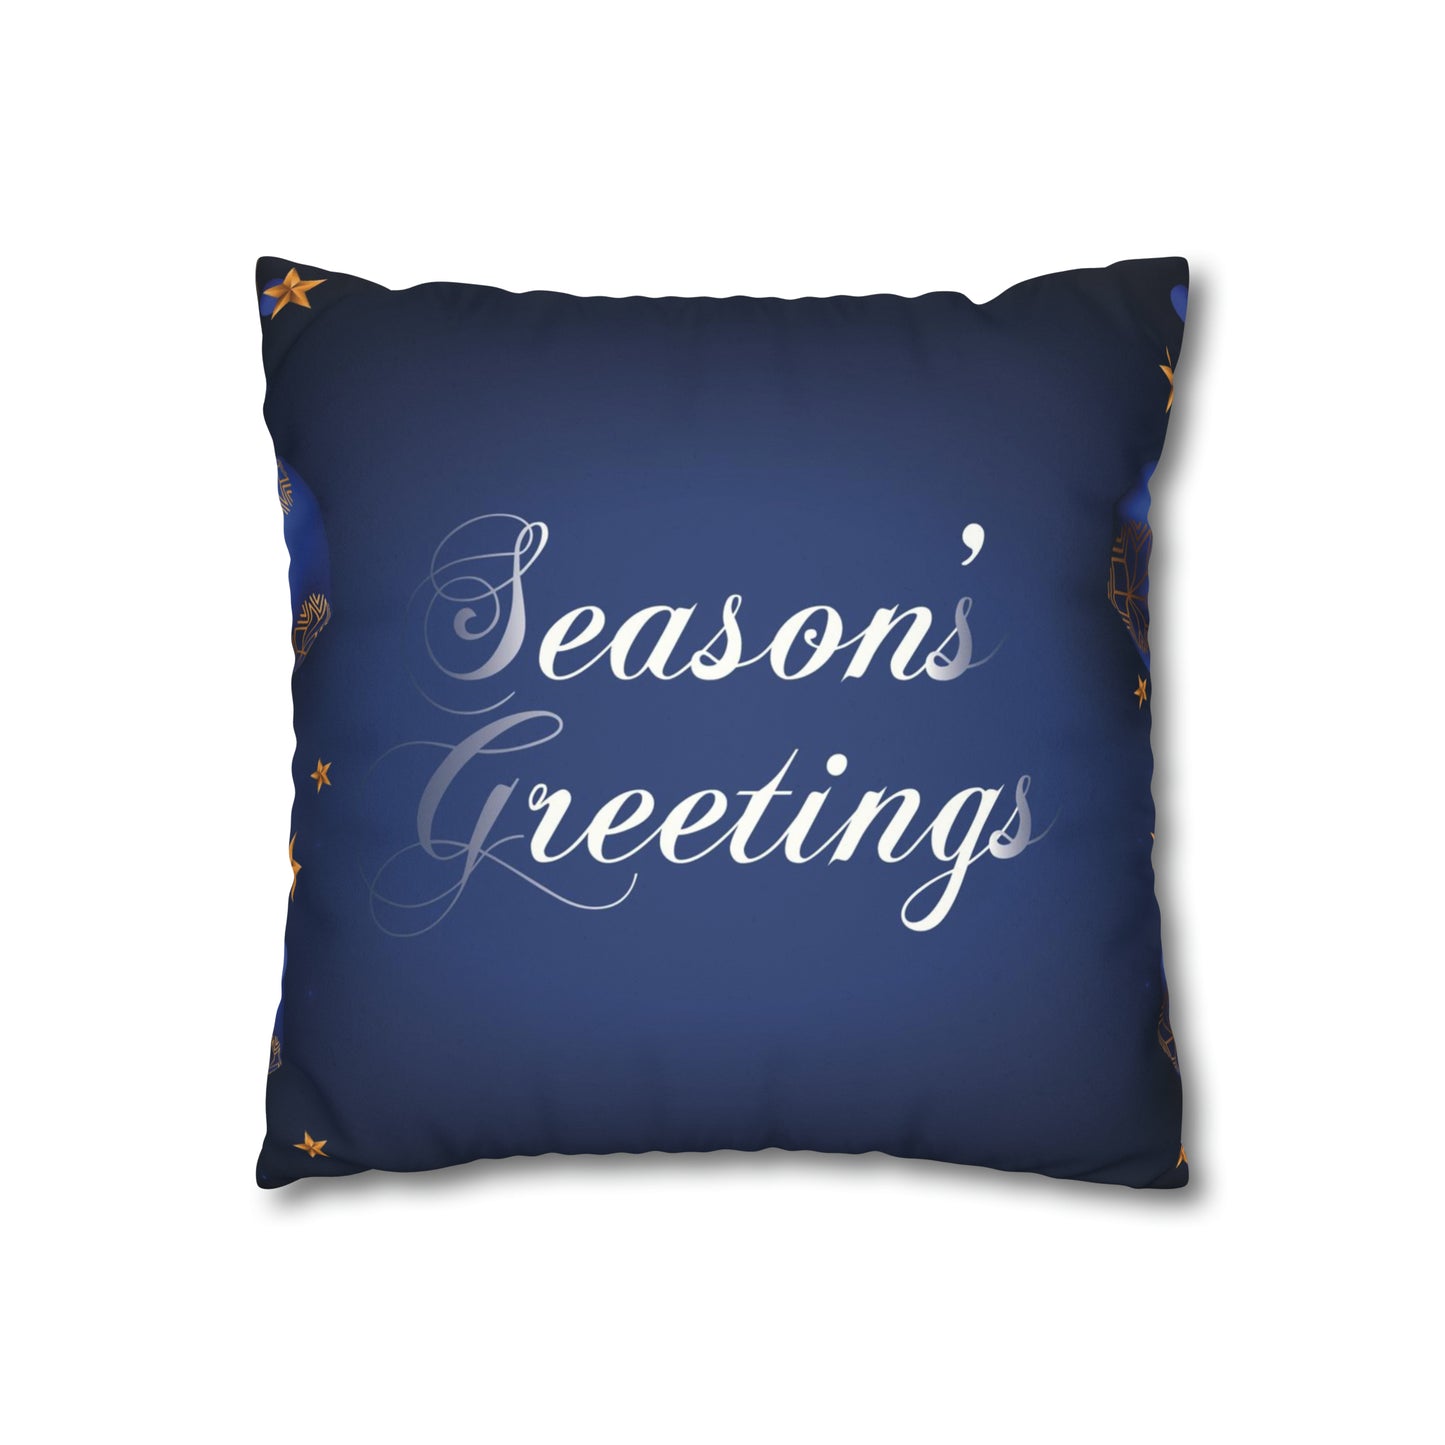 Season's Greetings Faux Suede Square Pillow Case, Blue